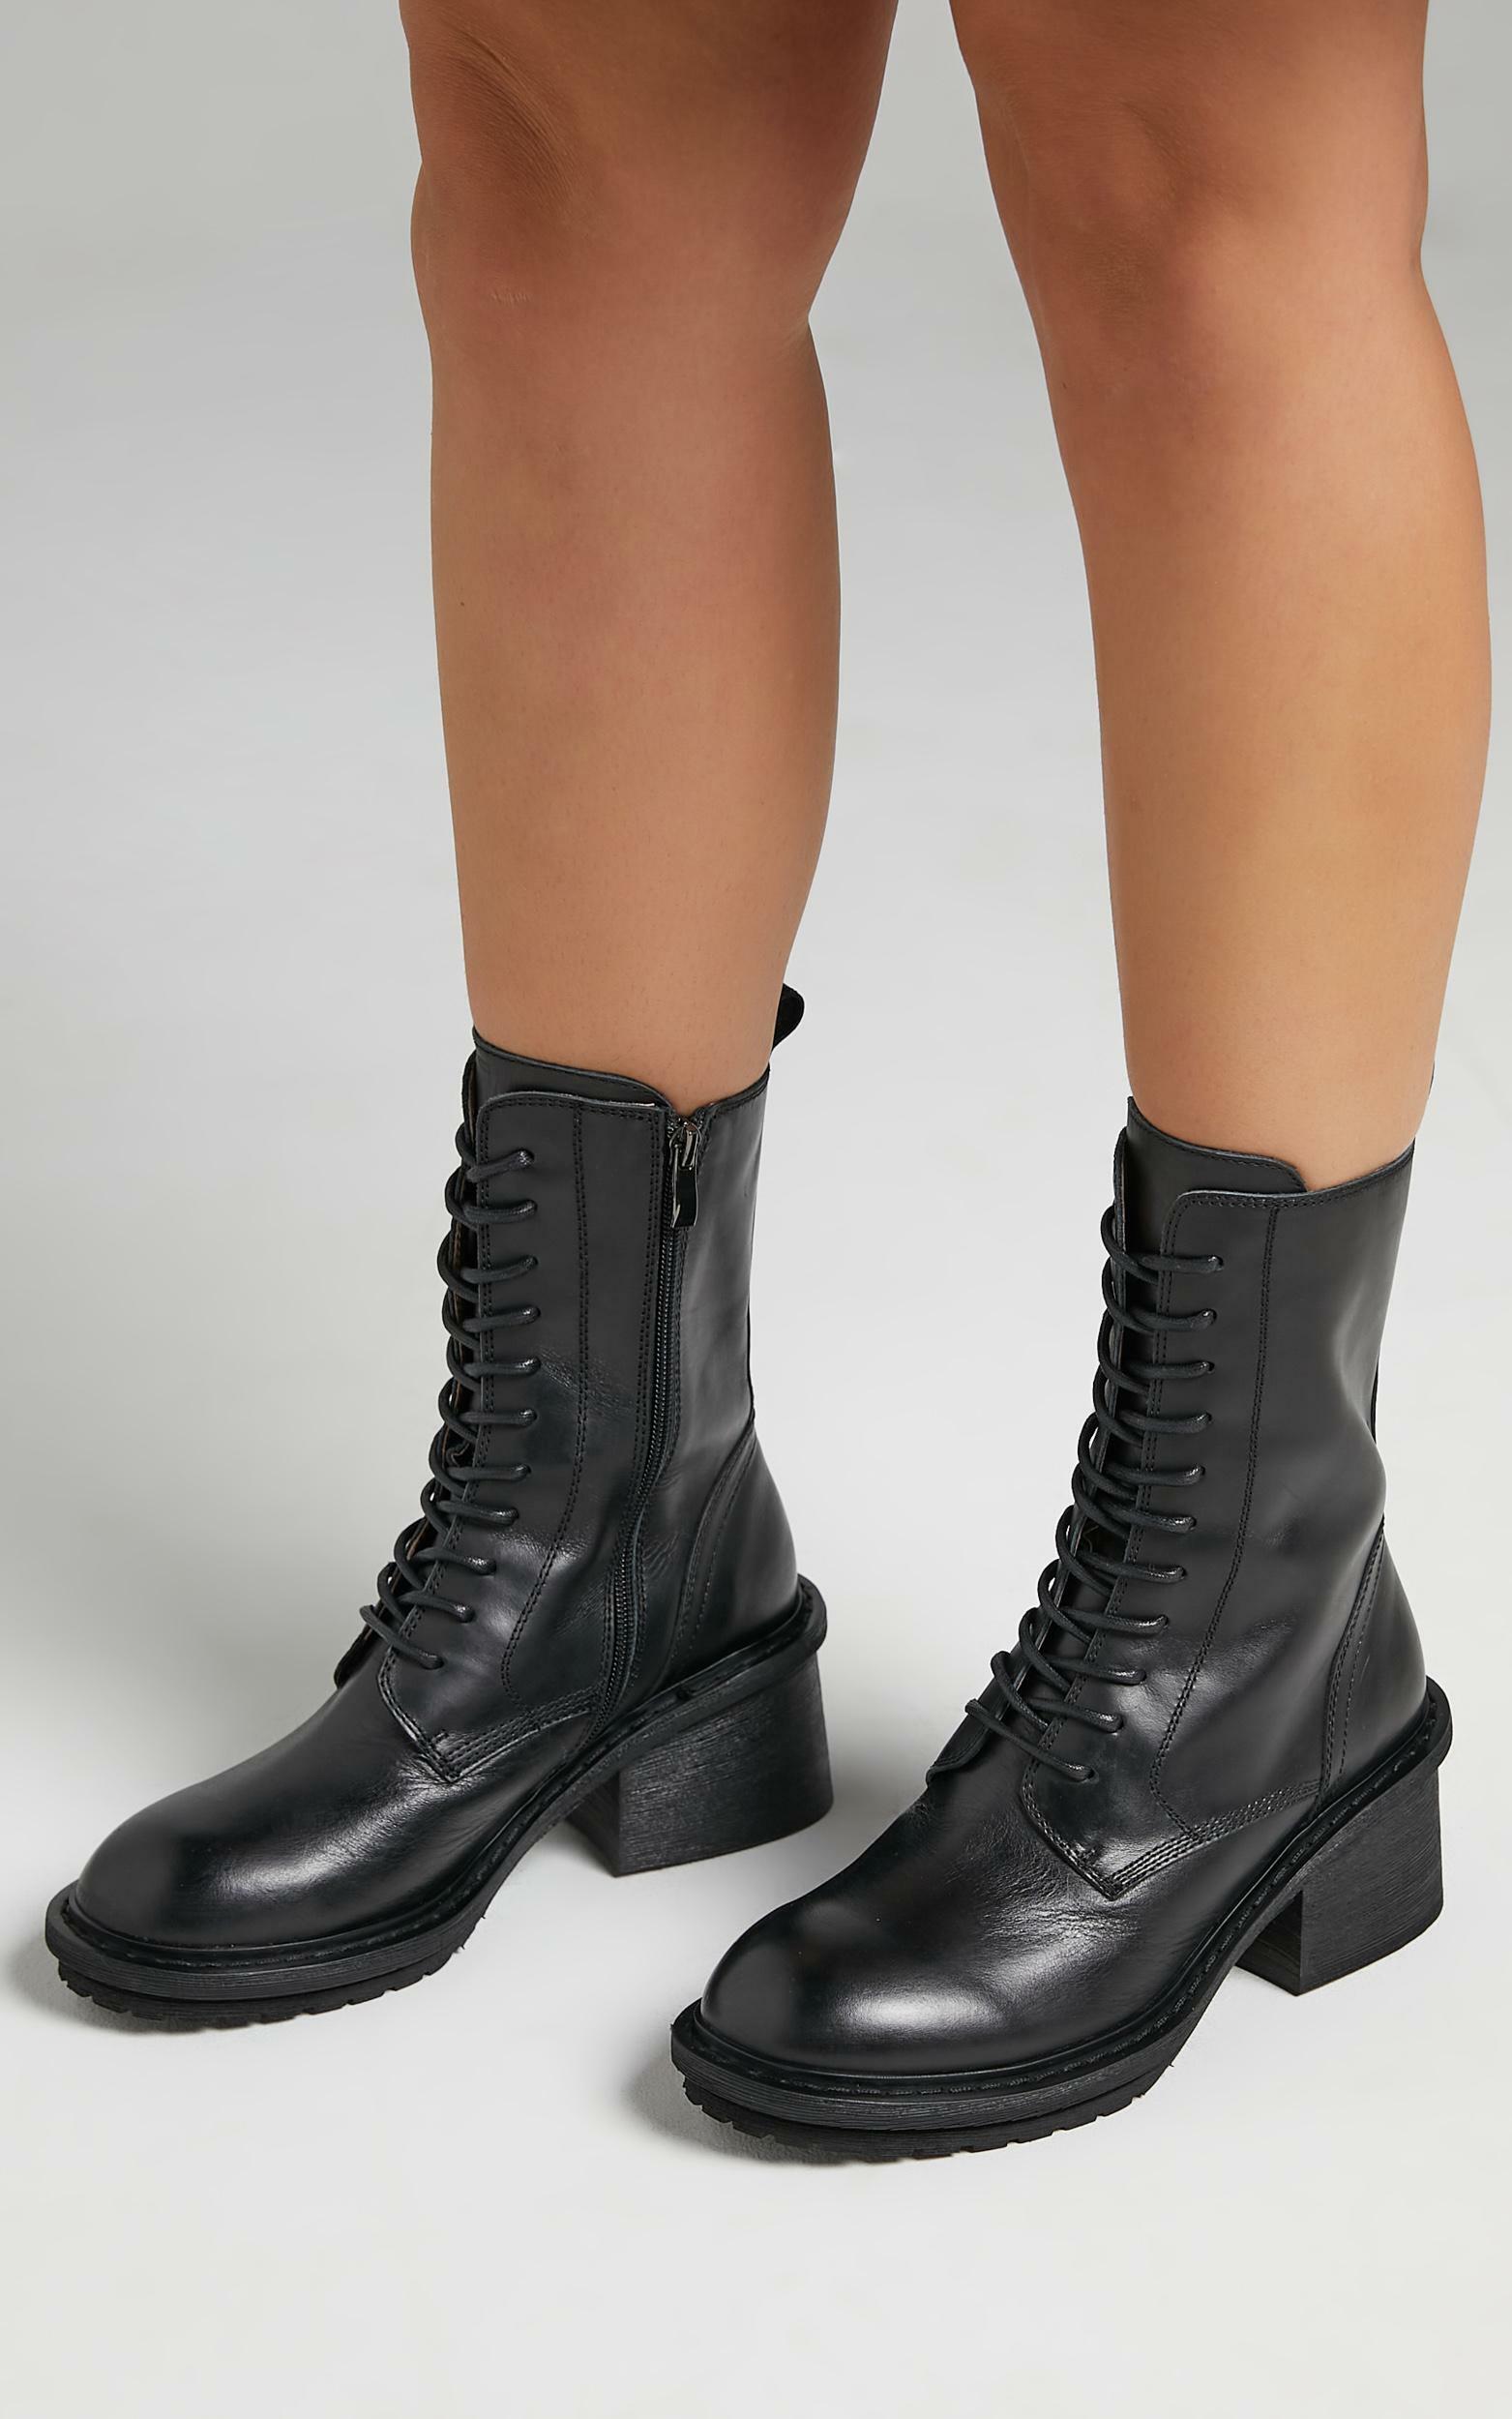 Alias Mae - Mya Boots in Black Burnished - 5.5, BLK1, hi-res image number null